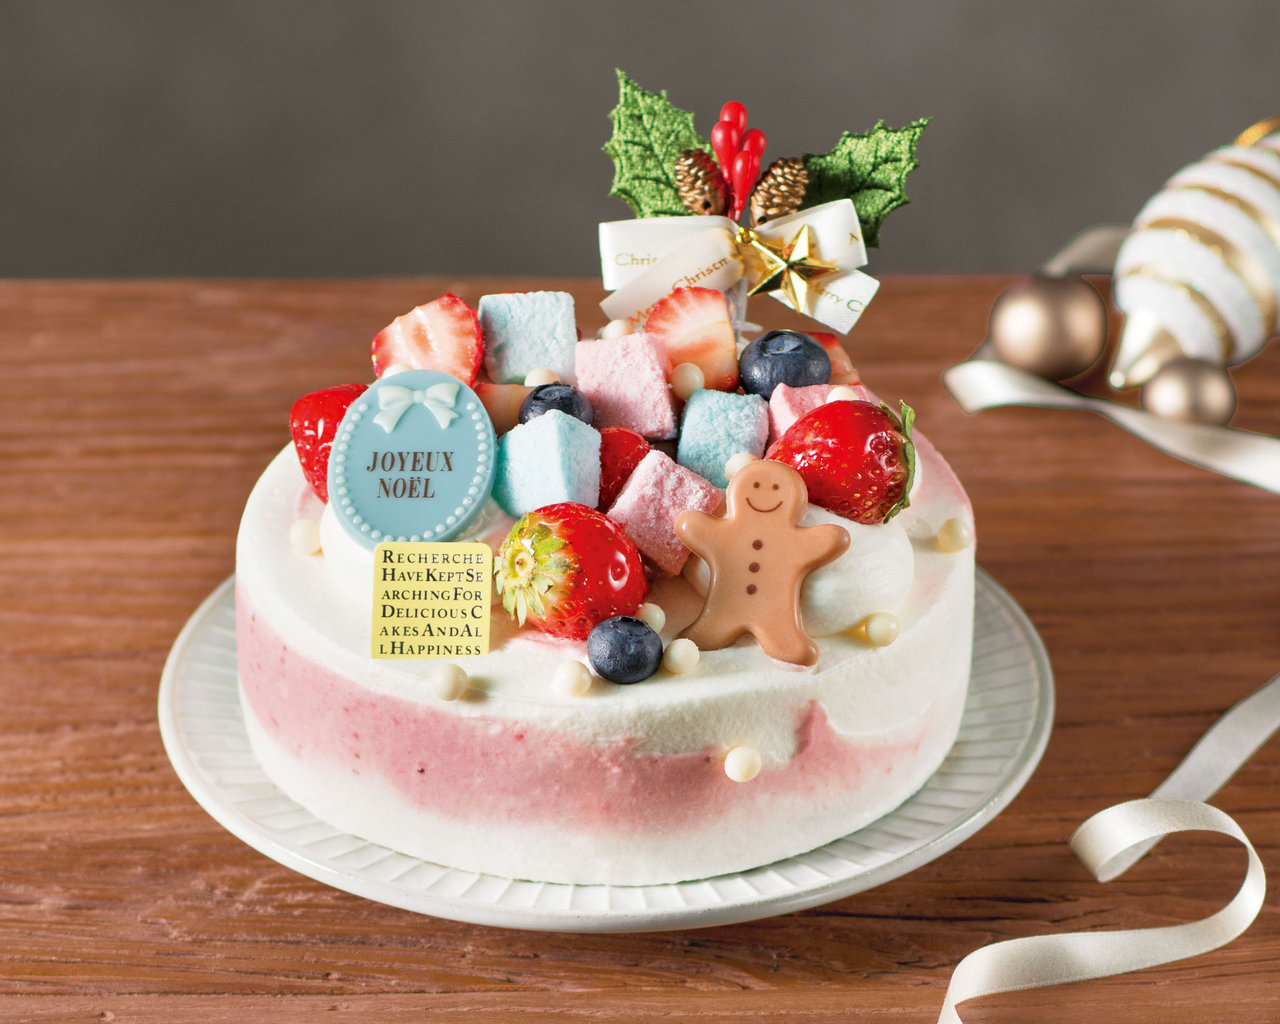 ｓｎｓ映え間違いなし フォトジェニックな今年のクリスマスケーキたち 奈良からはルシェルシュのケーキが登場 大丸心斎橋店 奈良の地元情報を毎日更新 ならぷら